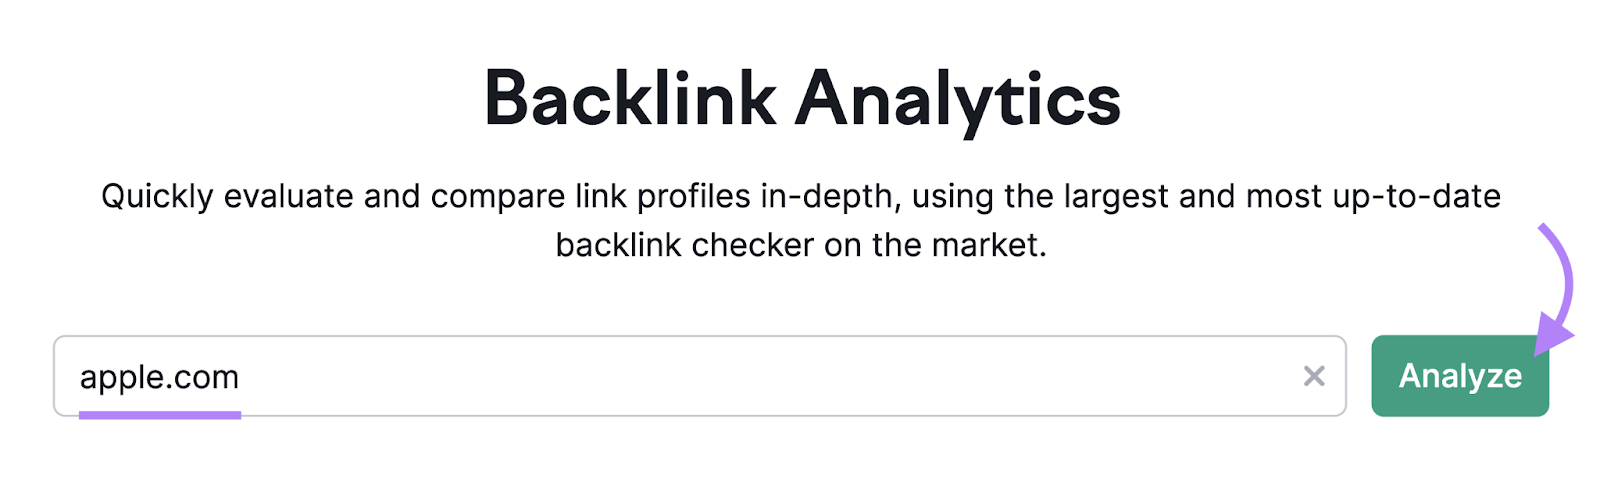 Backlink Analytics instrumentality   hunt  for apple.com